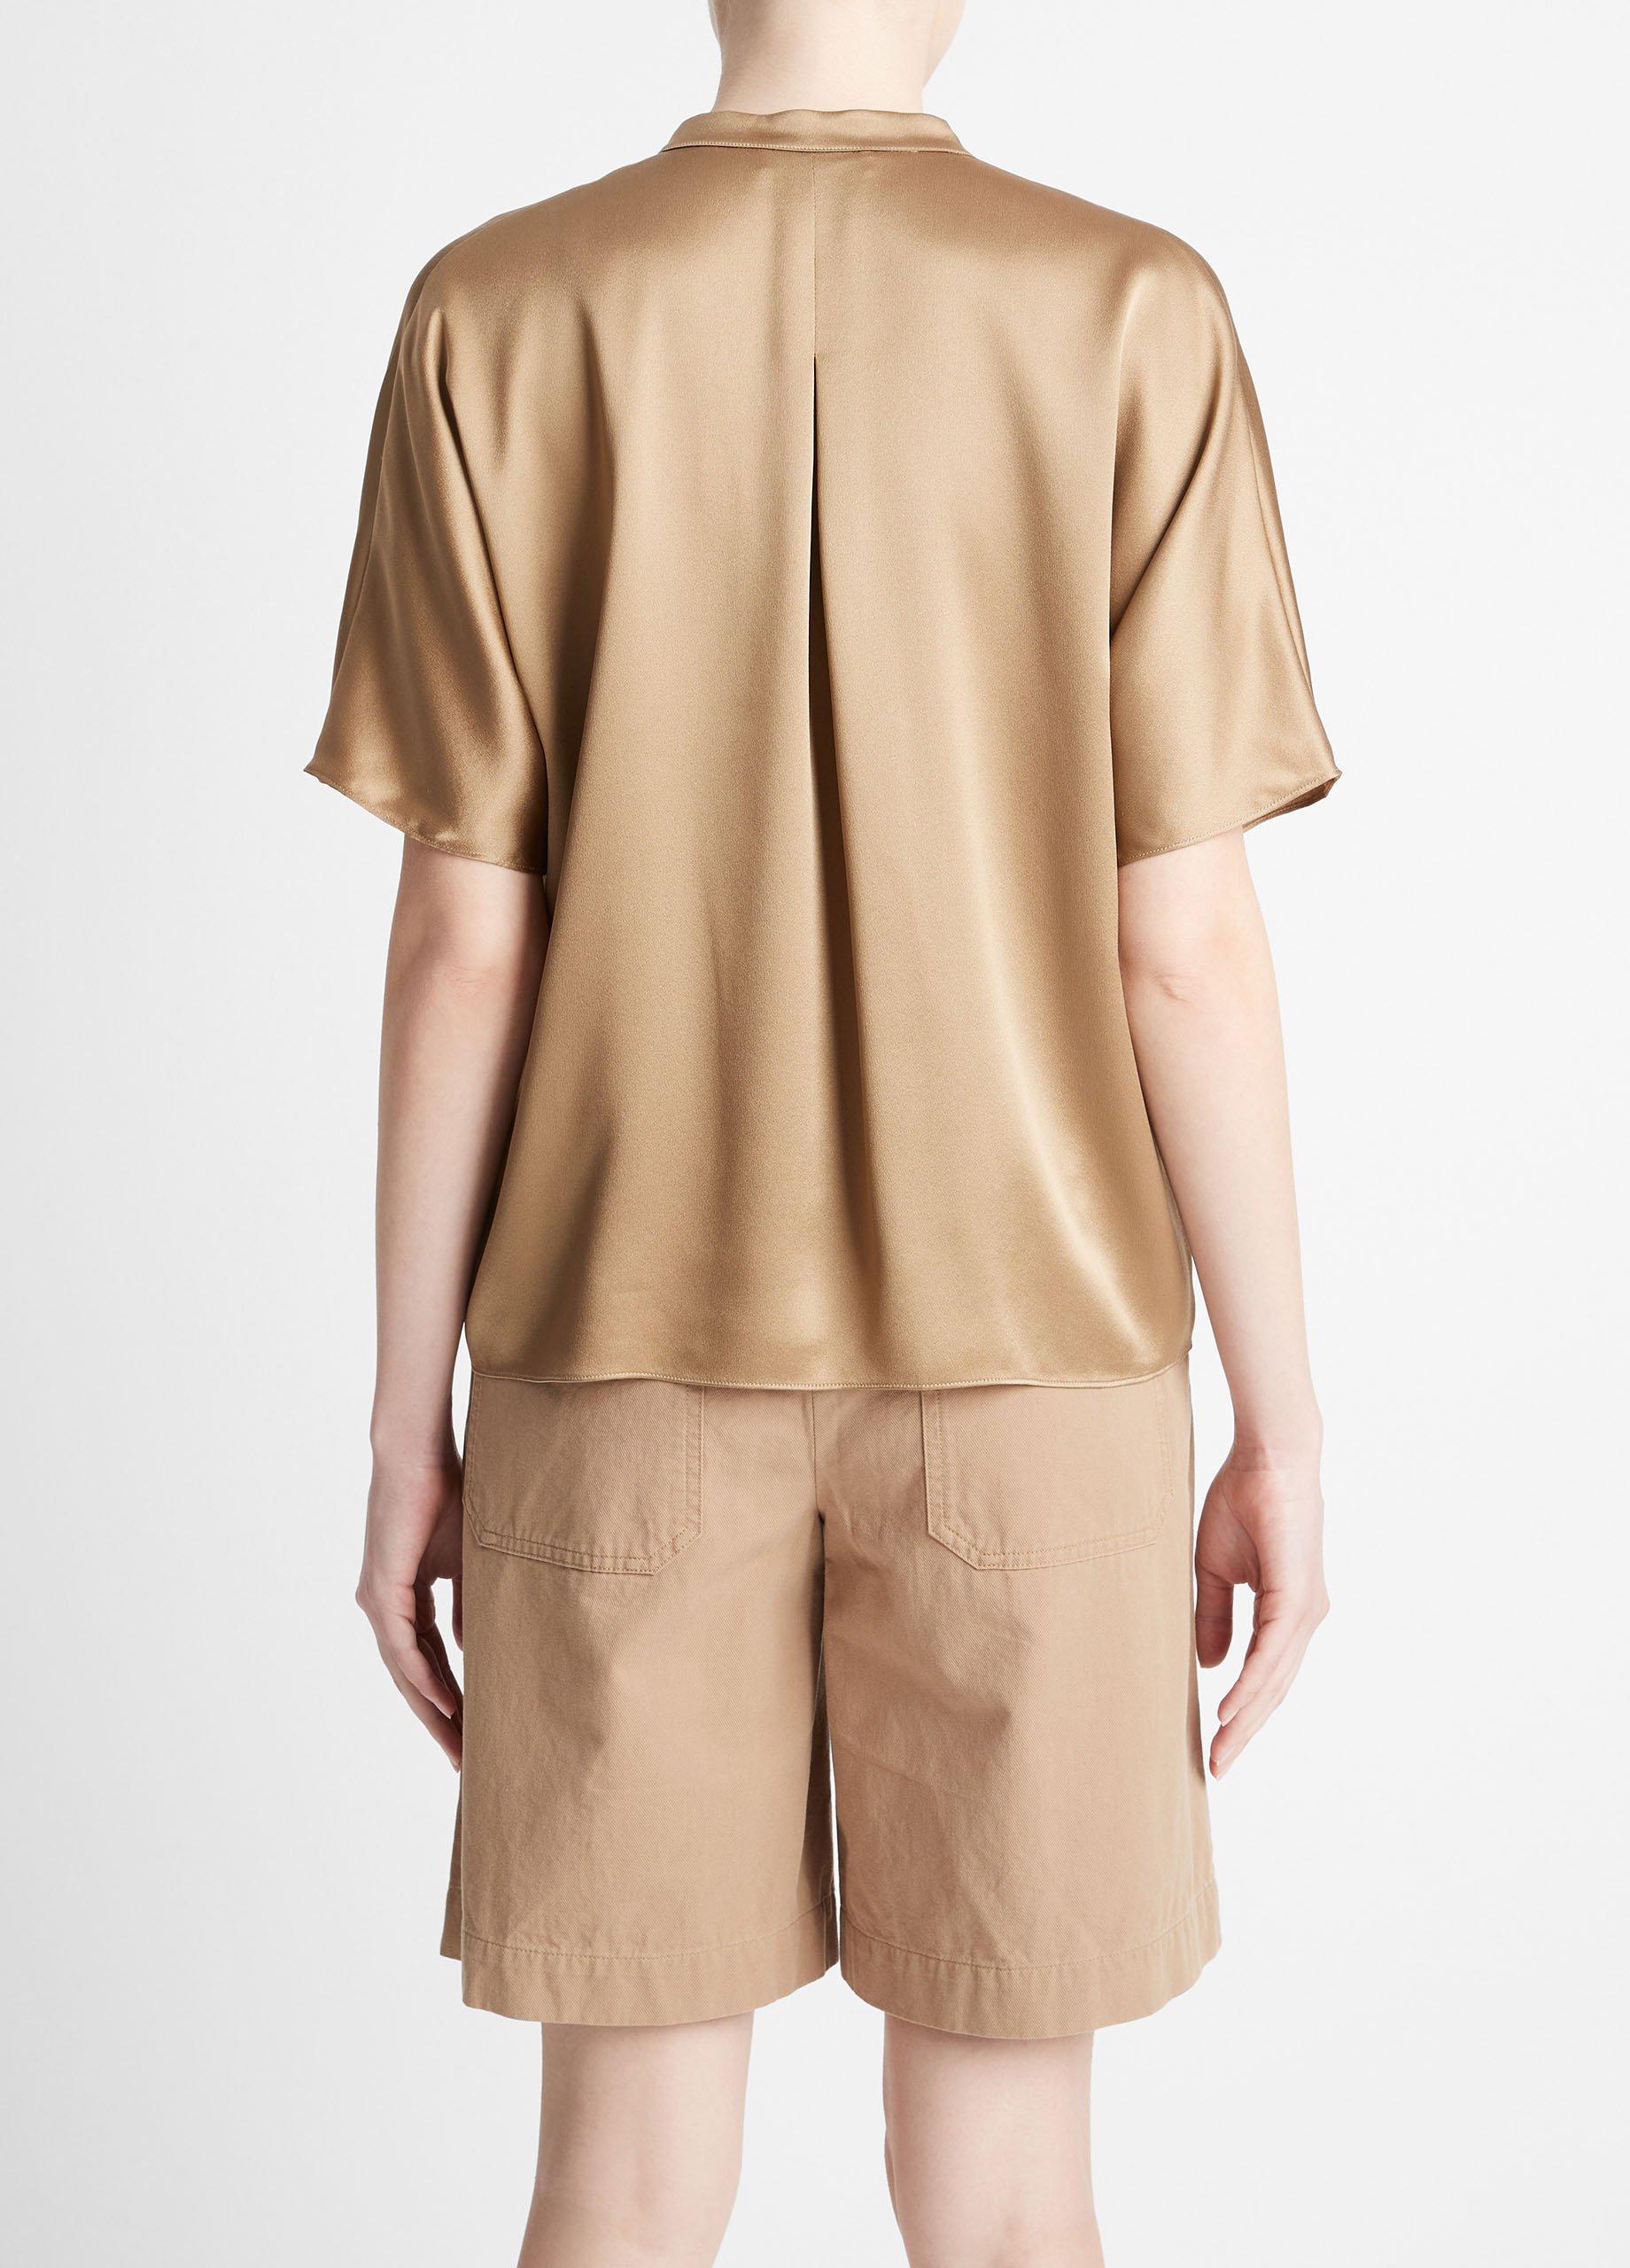 Vince. 100% Silk Tan Short Sleeve Blouse Size XS - 80% off